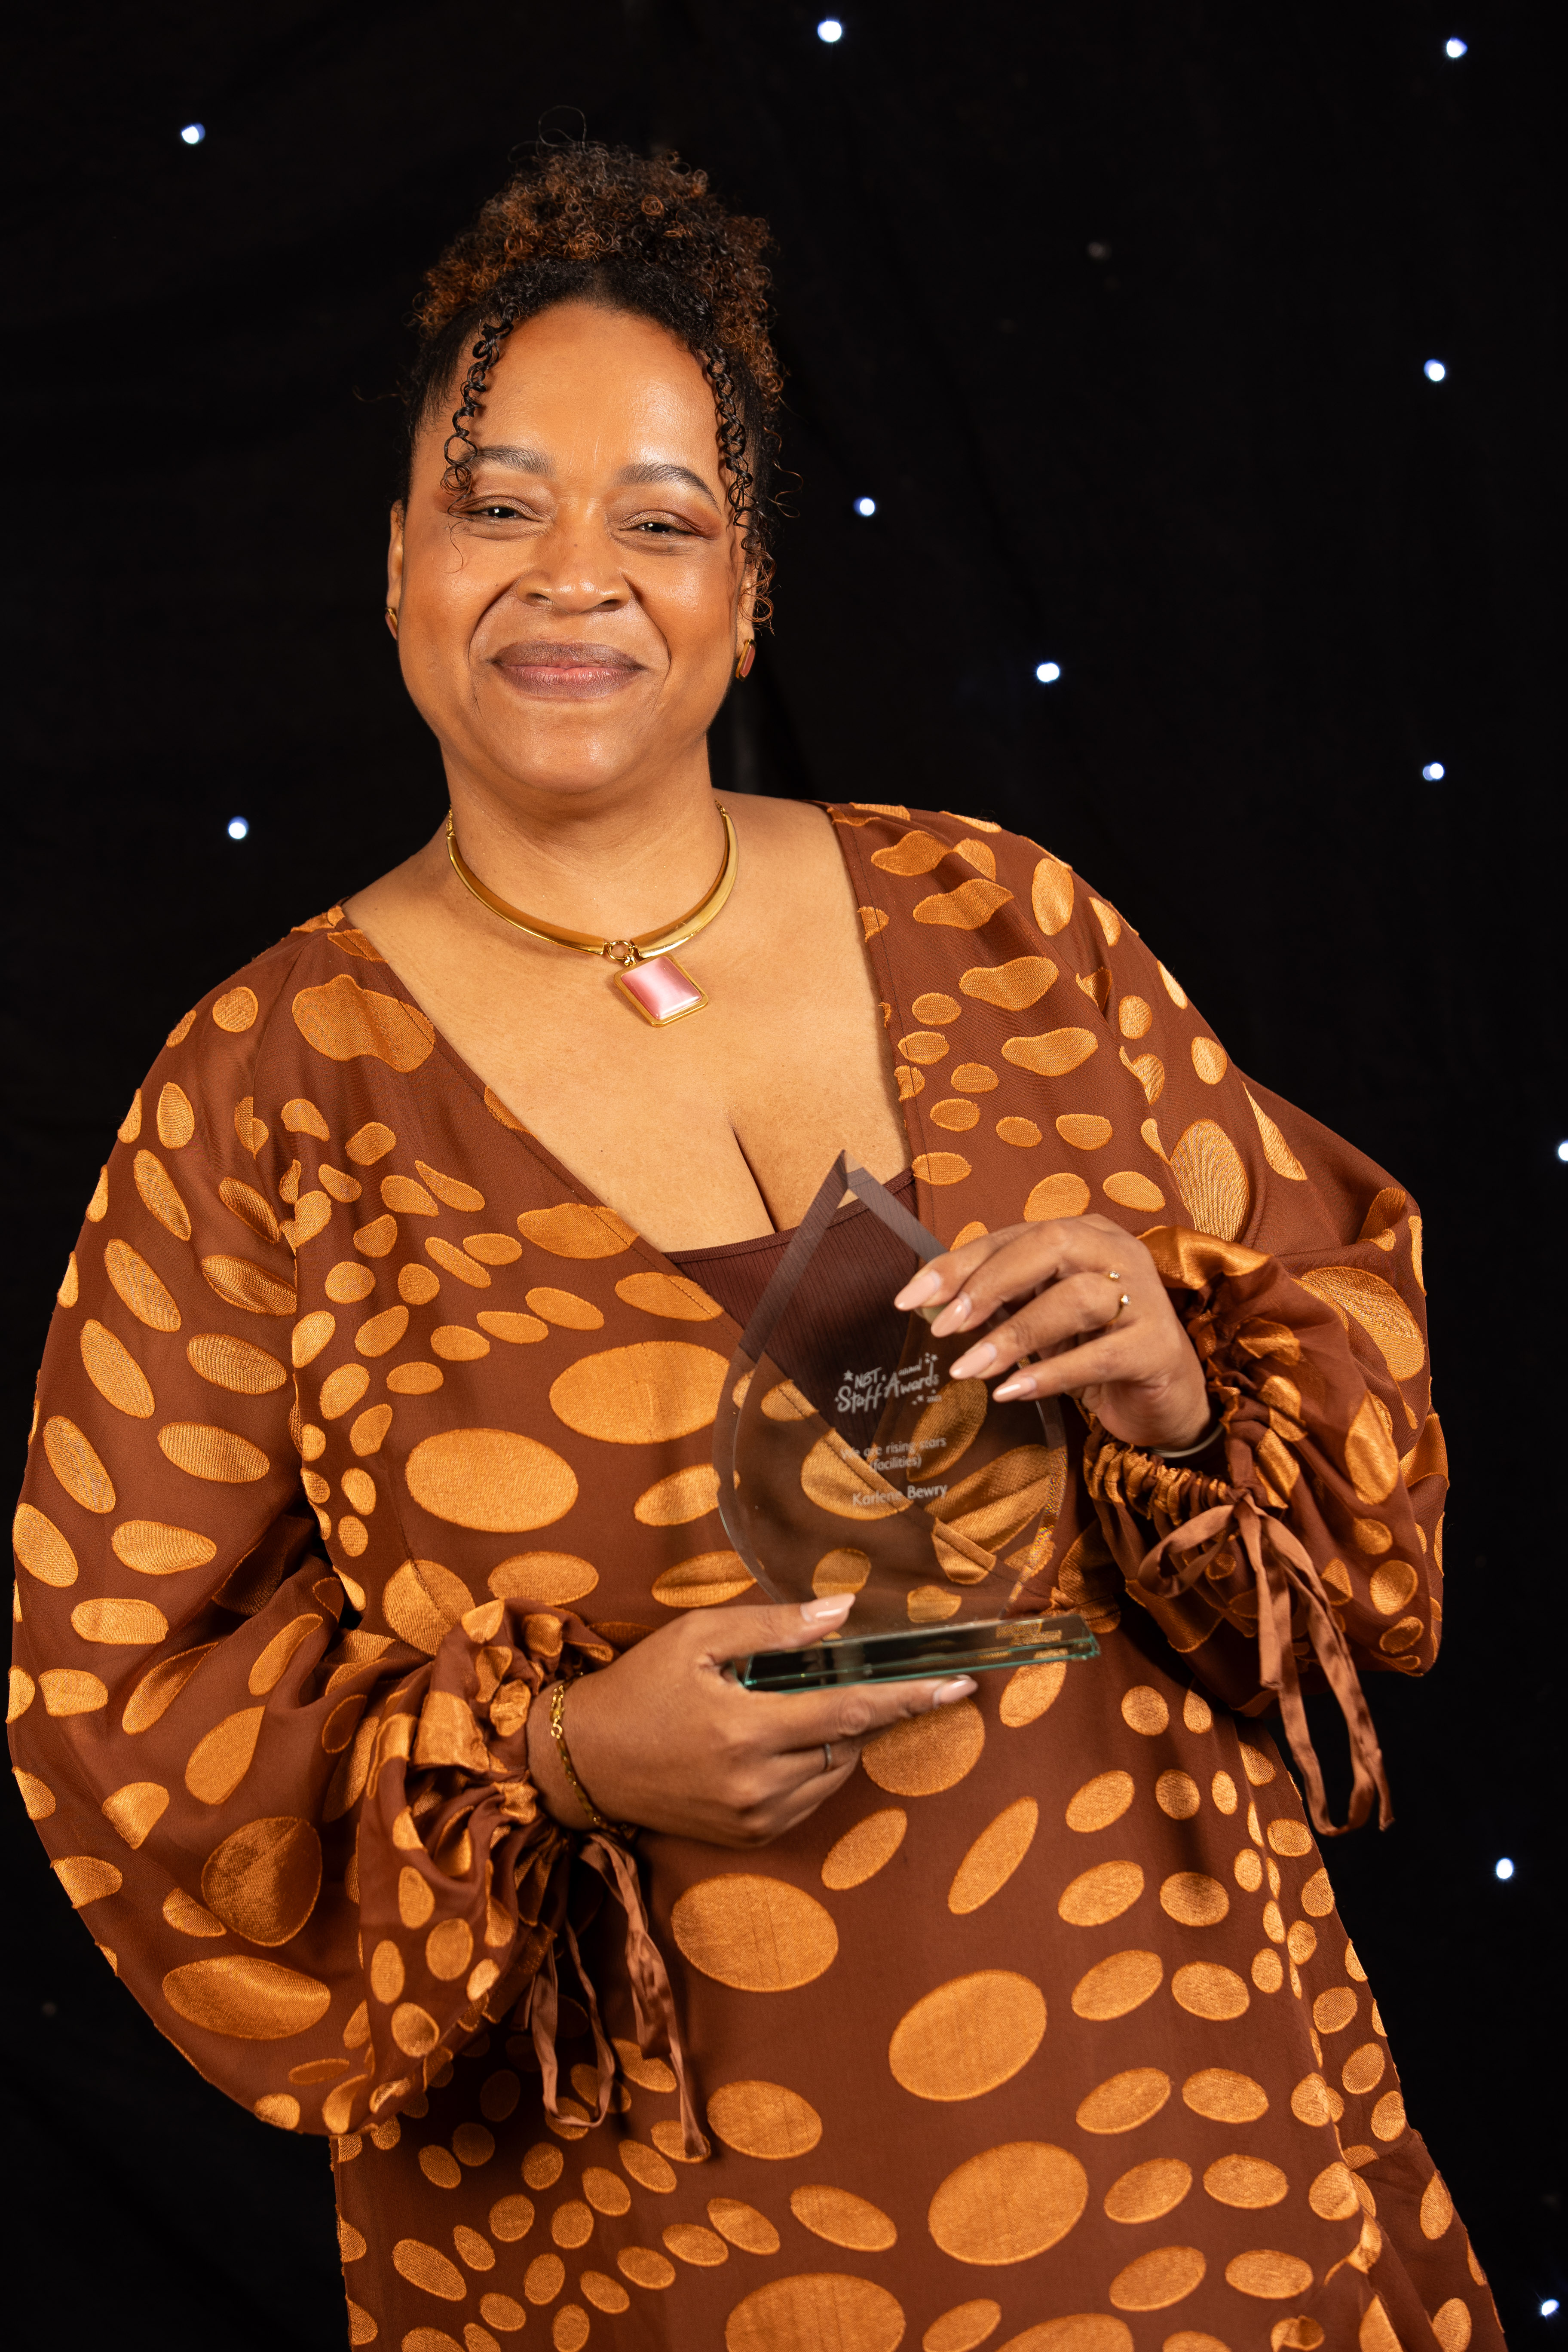 Karlene Bewry, winner of the We are rising stars (facilities) award